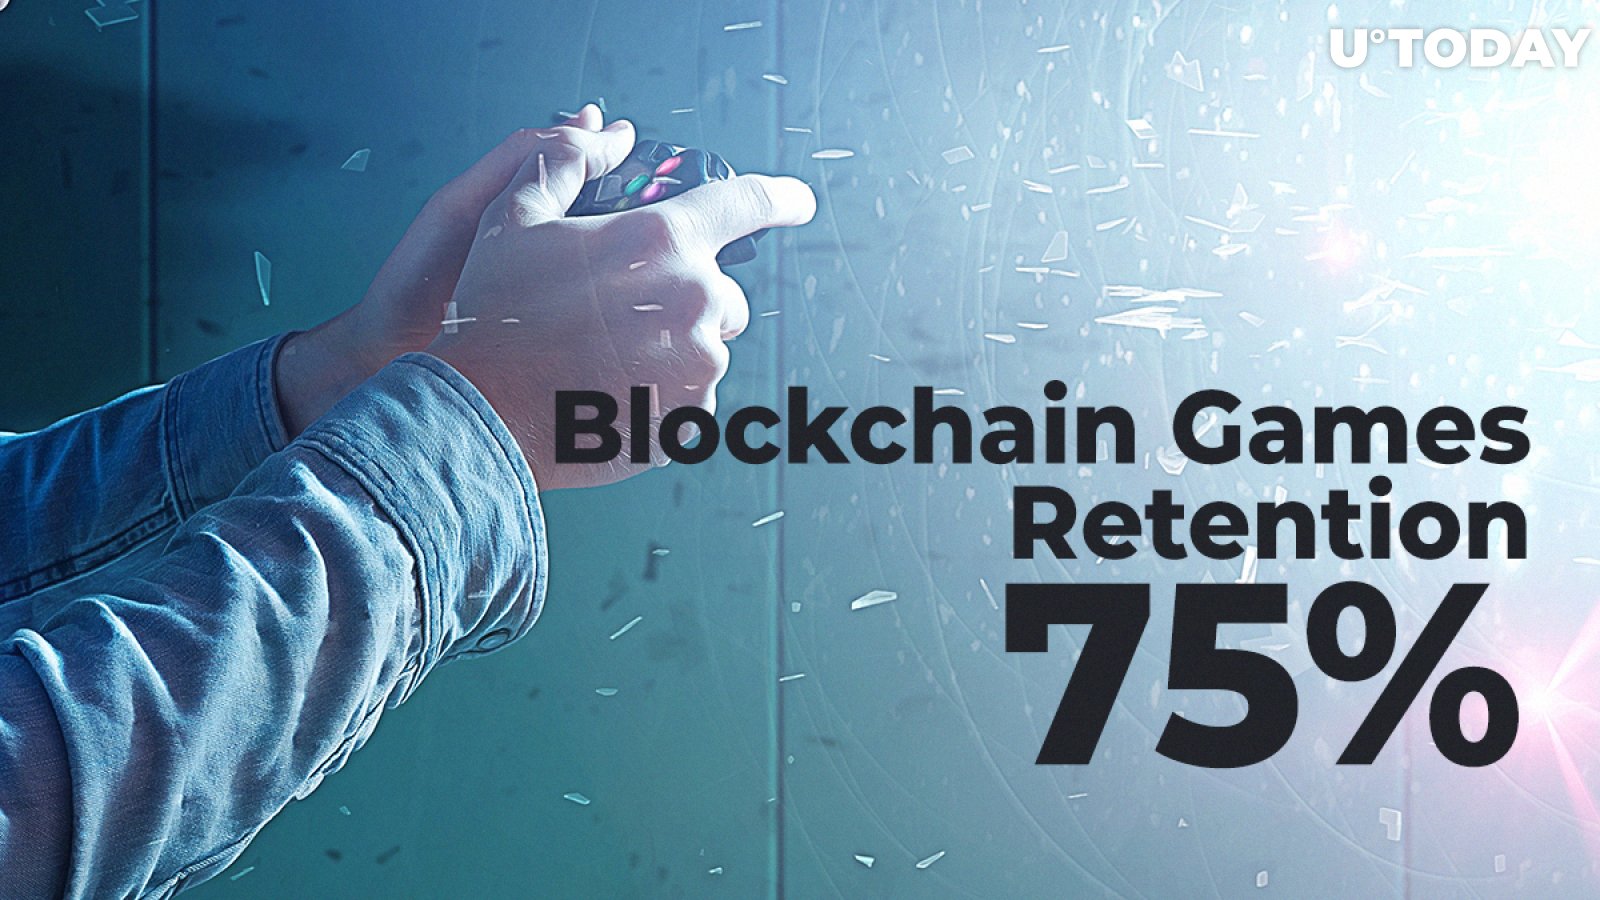 Blockchain Games Retention Rate Reaches 75%: dAppRadar